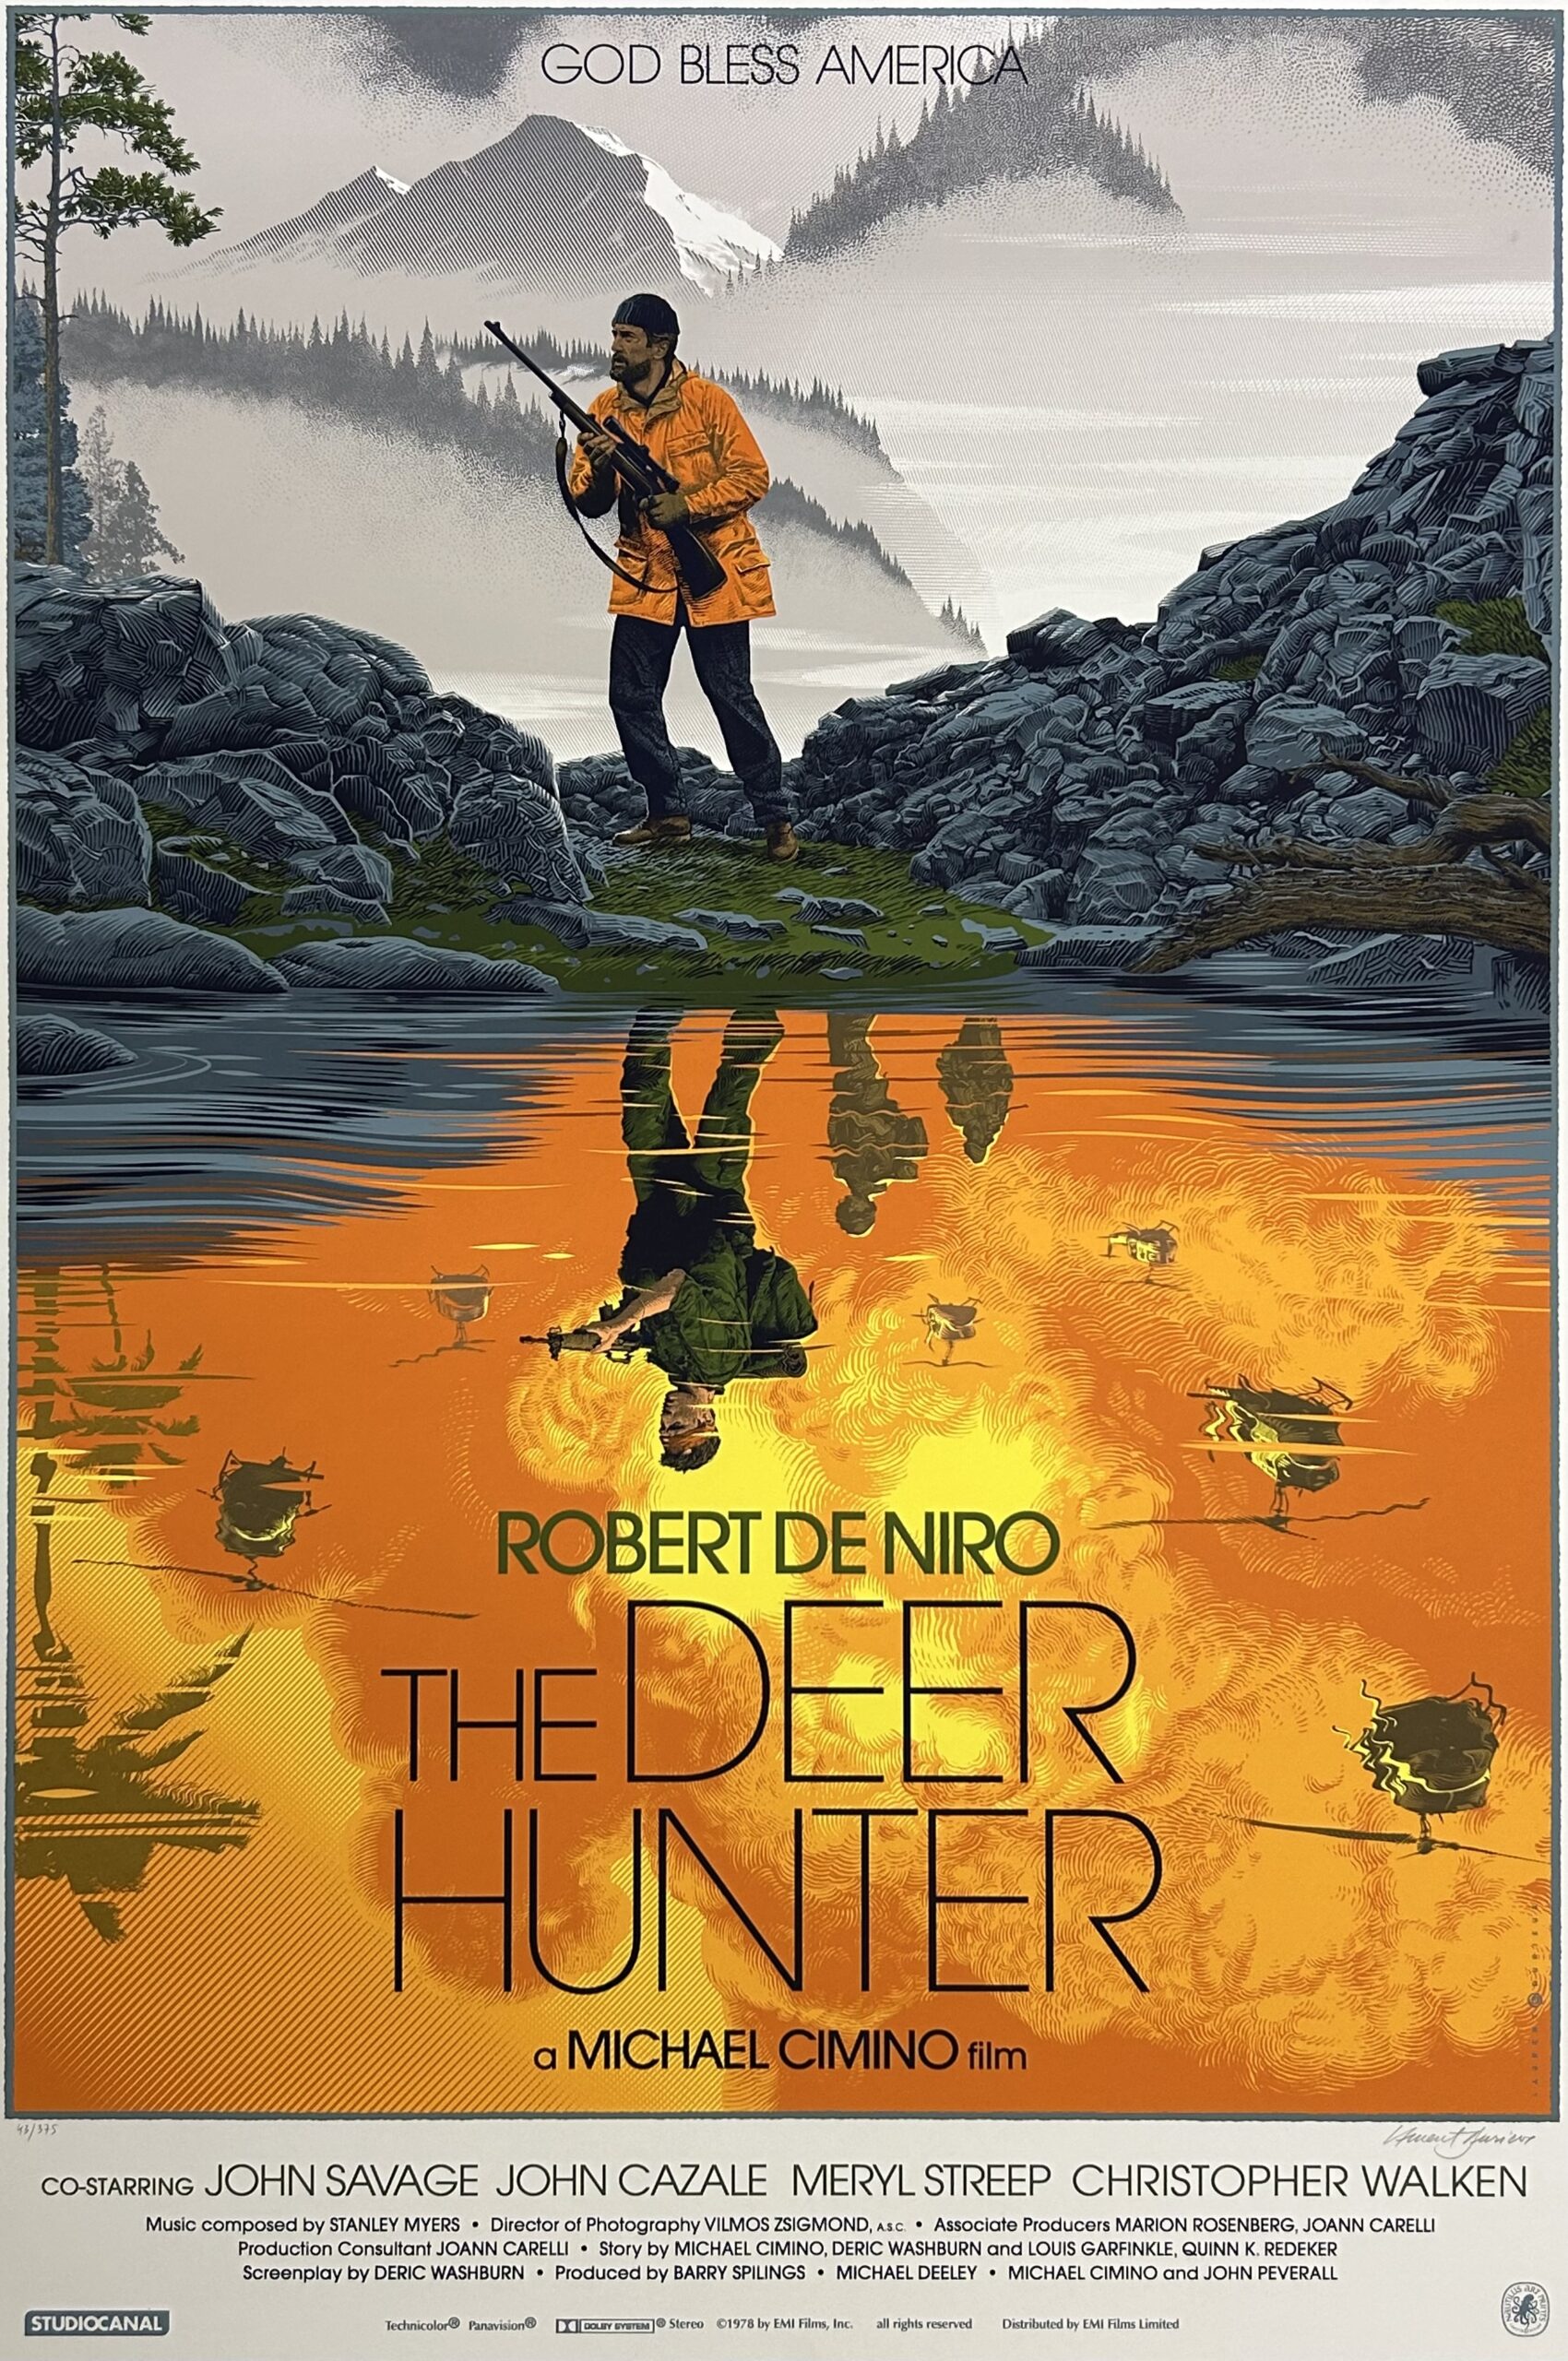 Robert De Niro requested a live round in 'The Deer Hunter